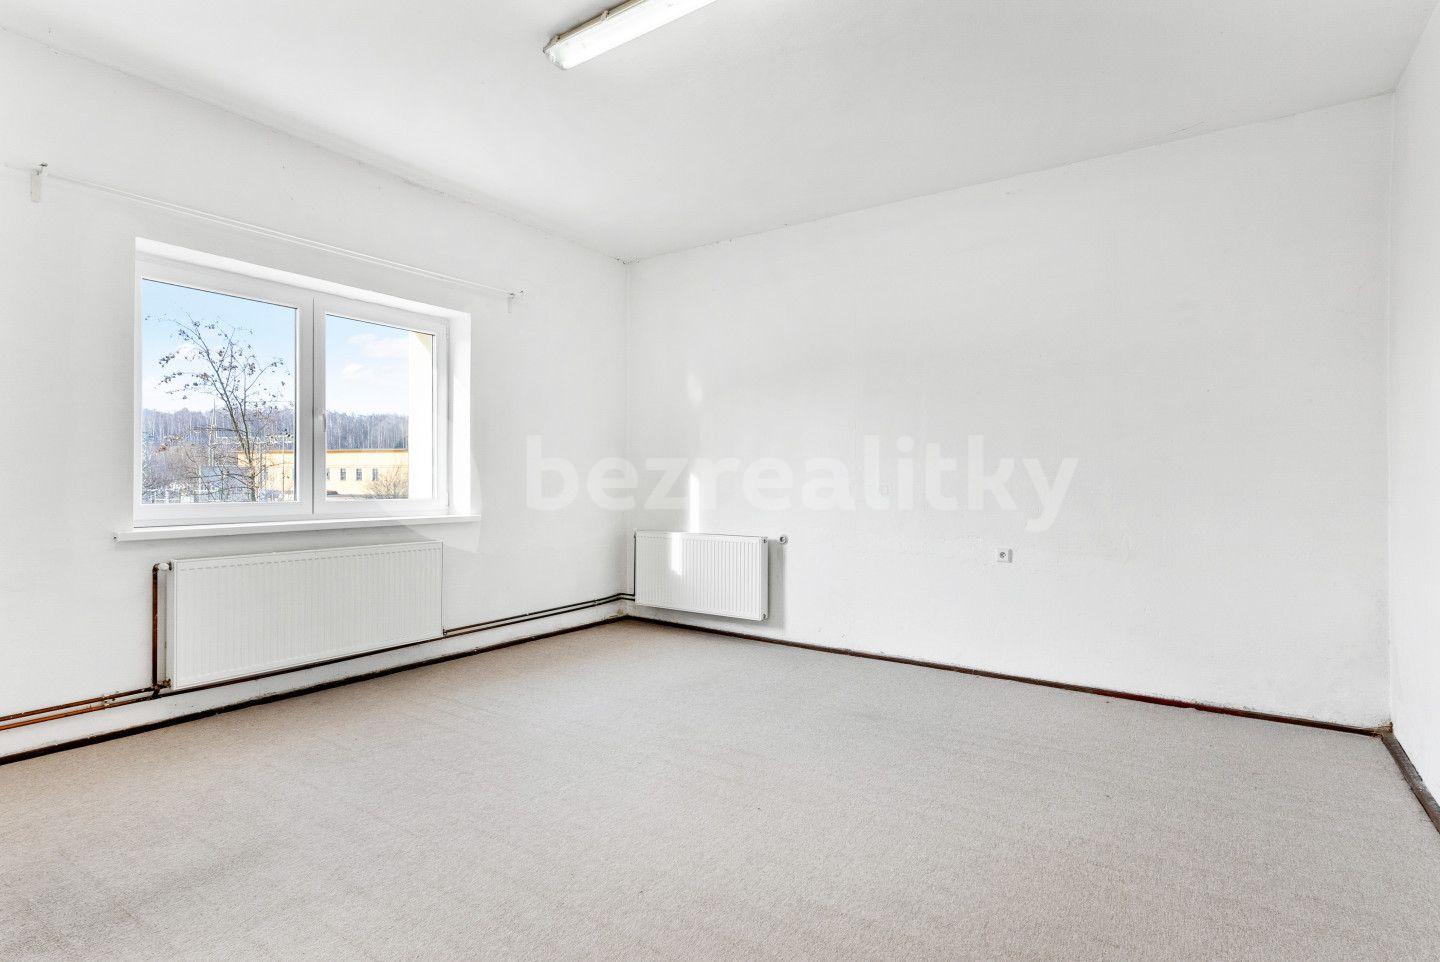 Prodej domu 290 m², pozemek 1.223 m², Prysk, Liberecký kraj